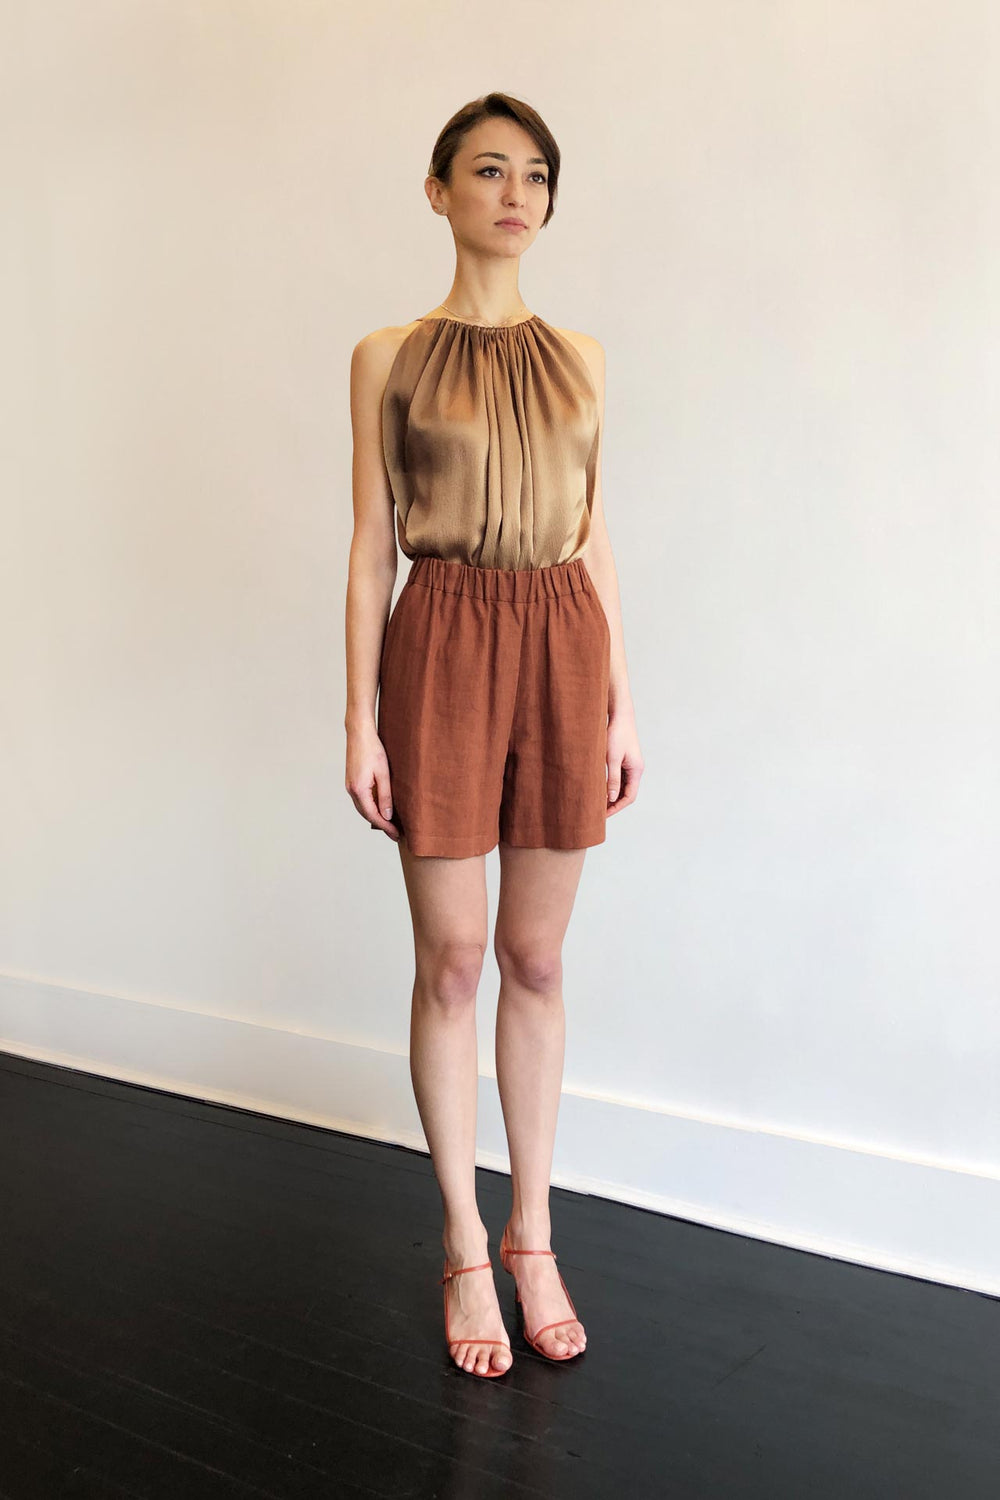 Fashion Designer CARL KAPP collection | Nano Brown Copper Linen Shorts | Sydney Australia